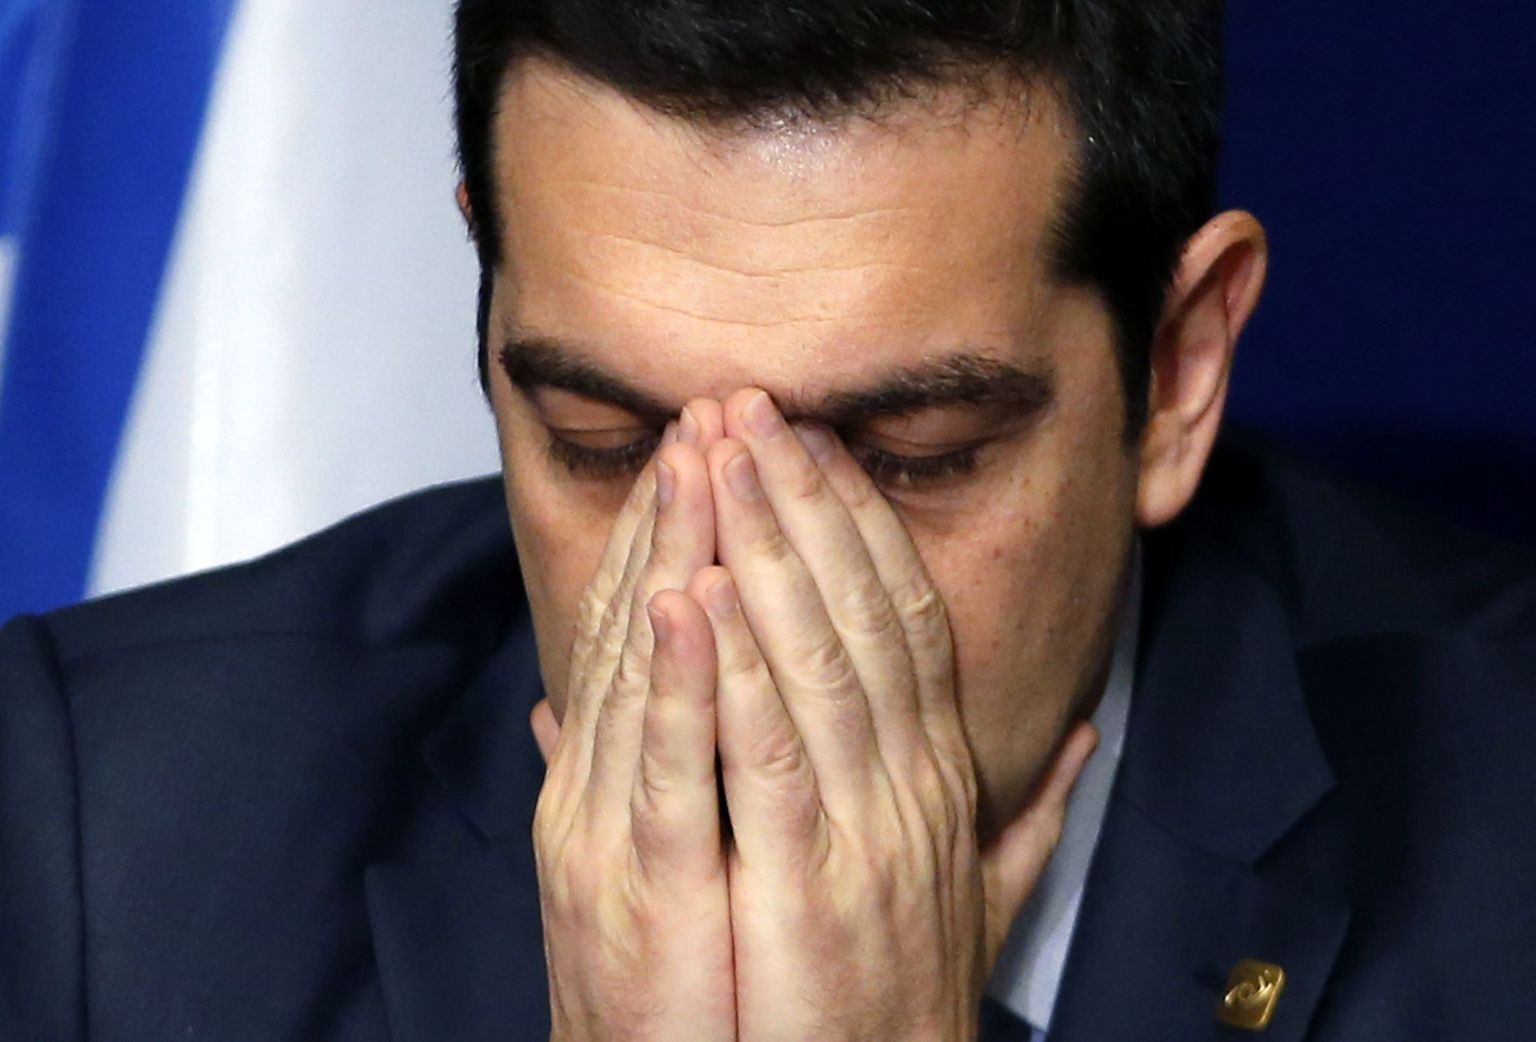 Kreeka peaminister Alexis Tsipras